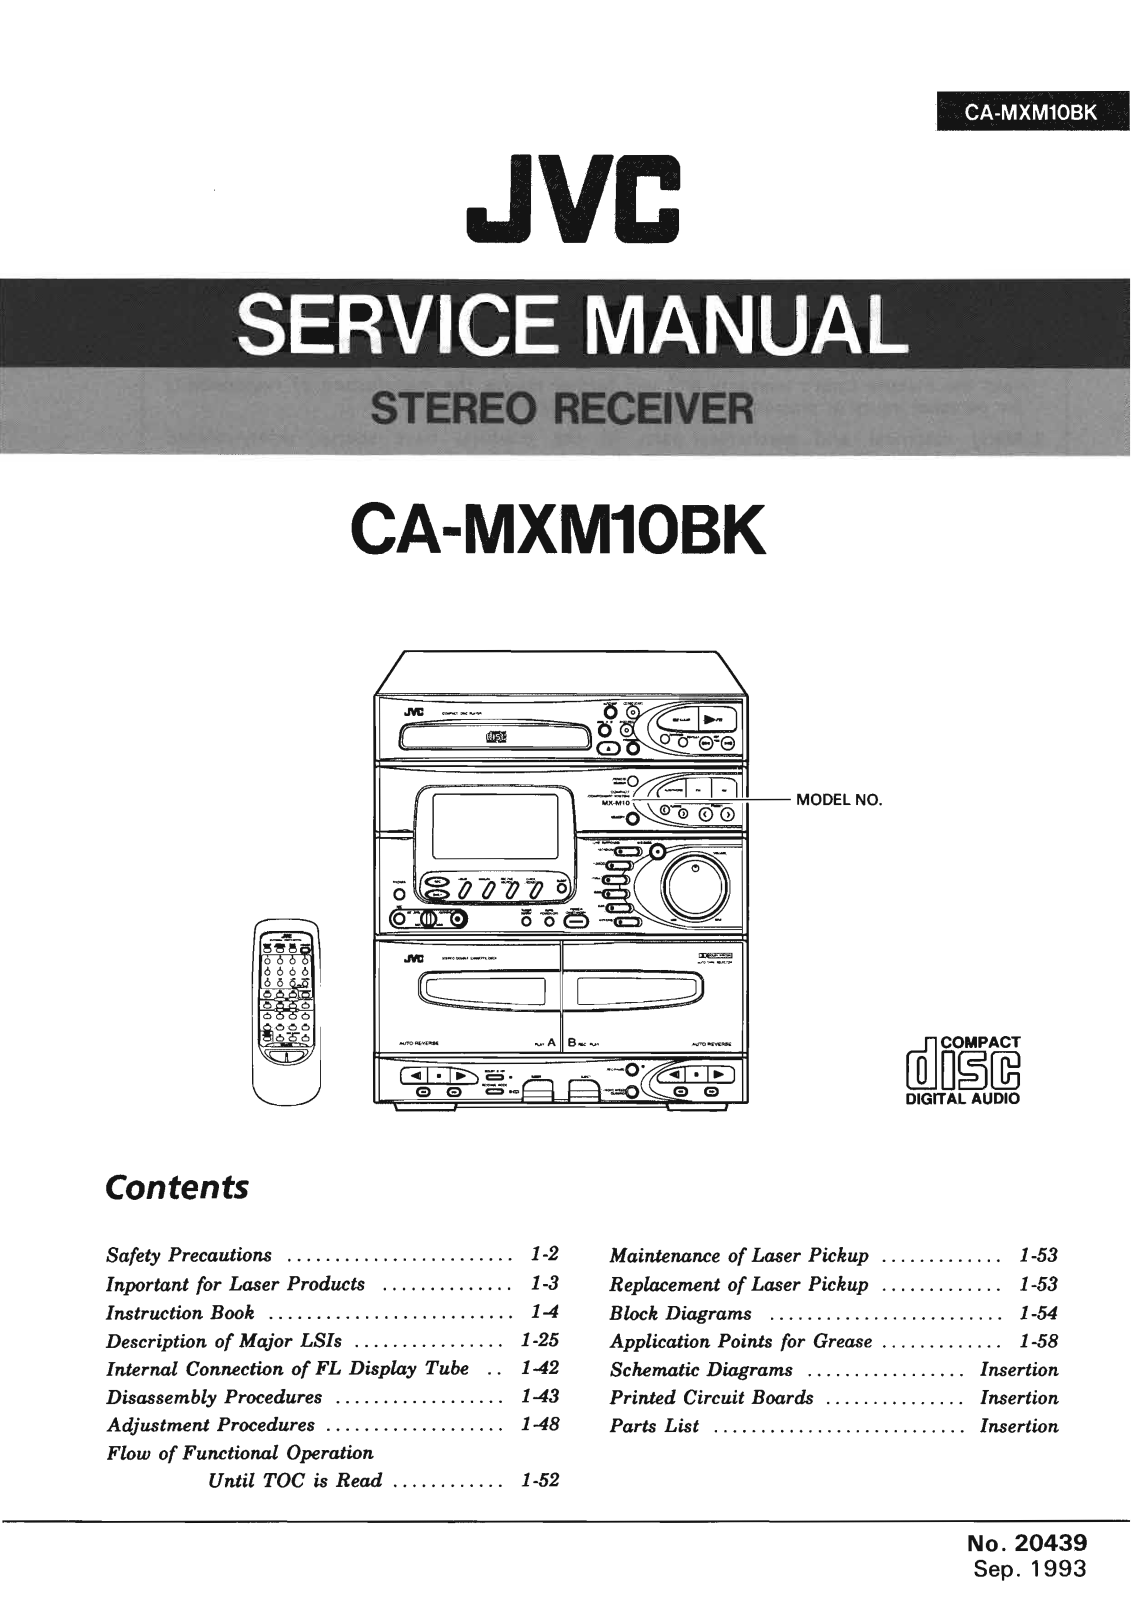 Jvc CA-MXM10-BK Service Manual